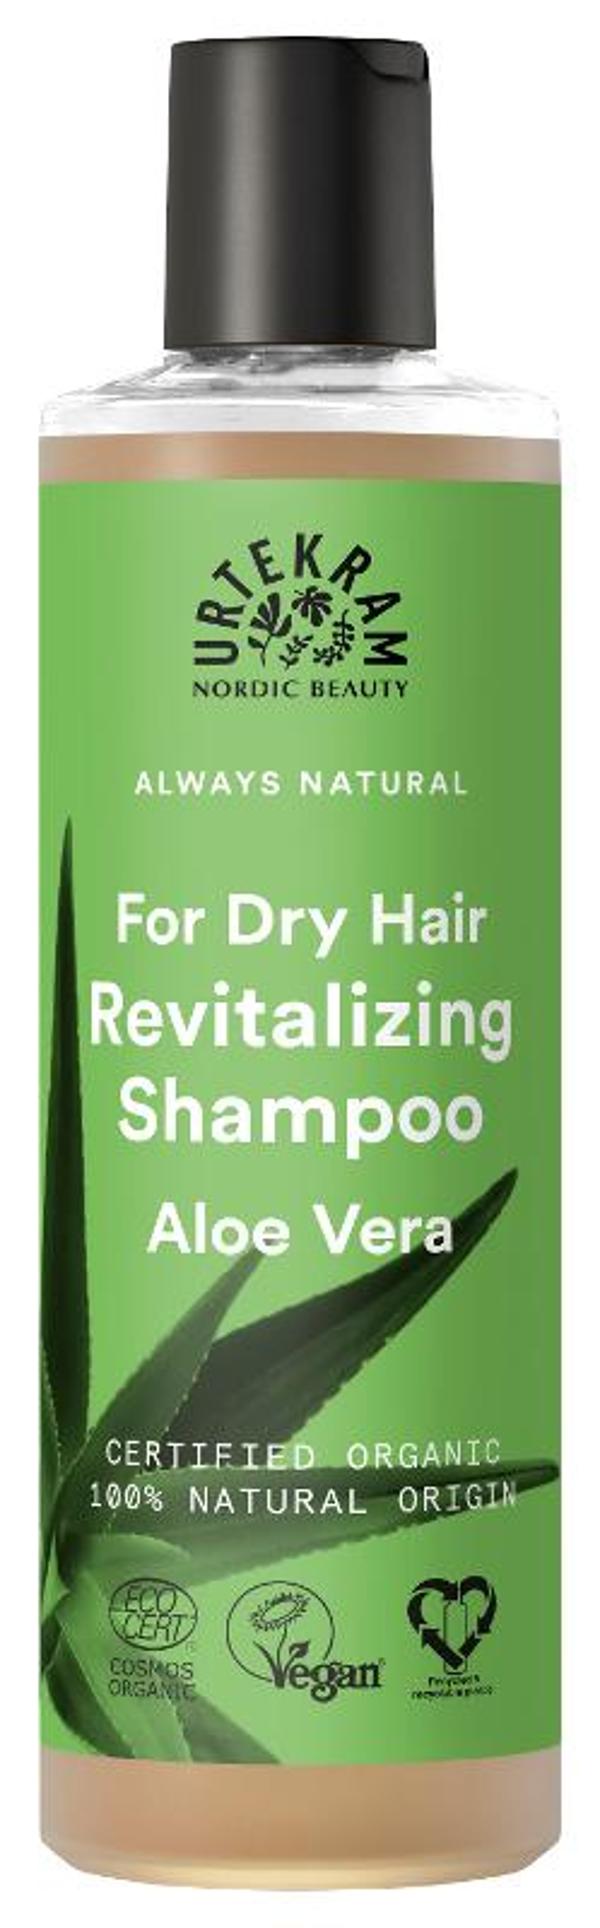 Produktfoto zu Revitalizing Shampoo Aloe Vera von Urtekram